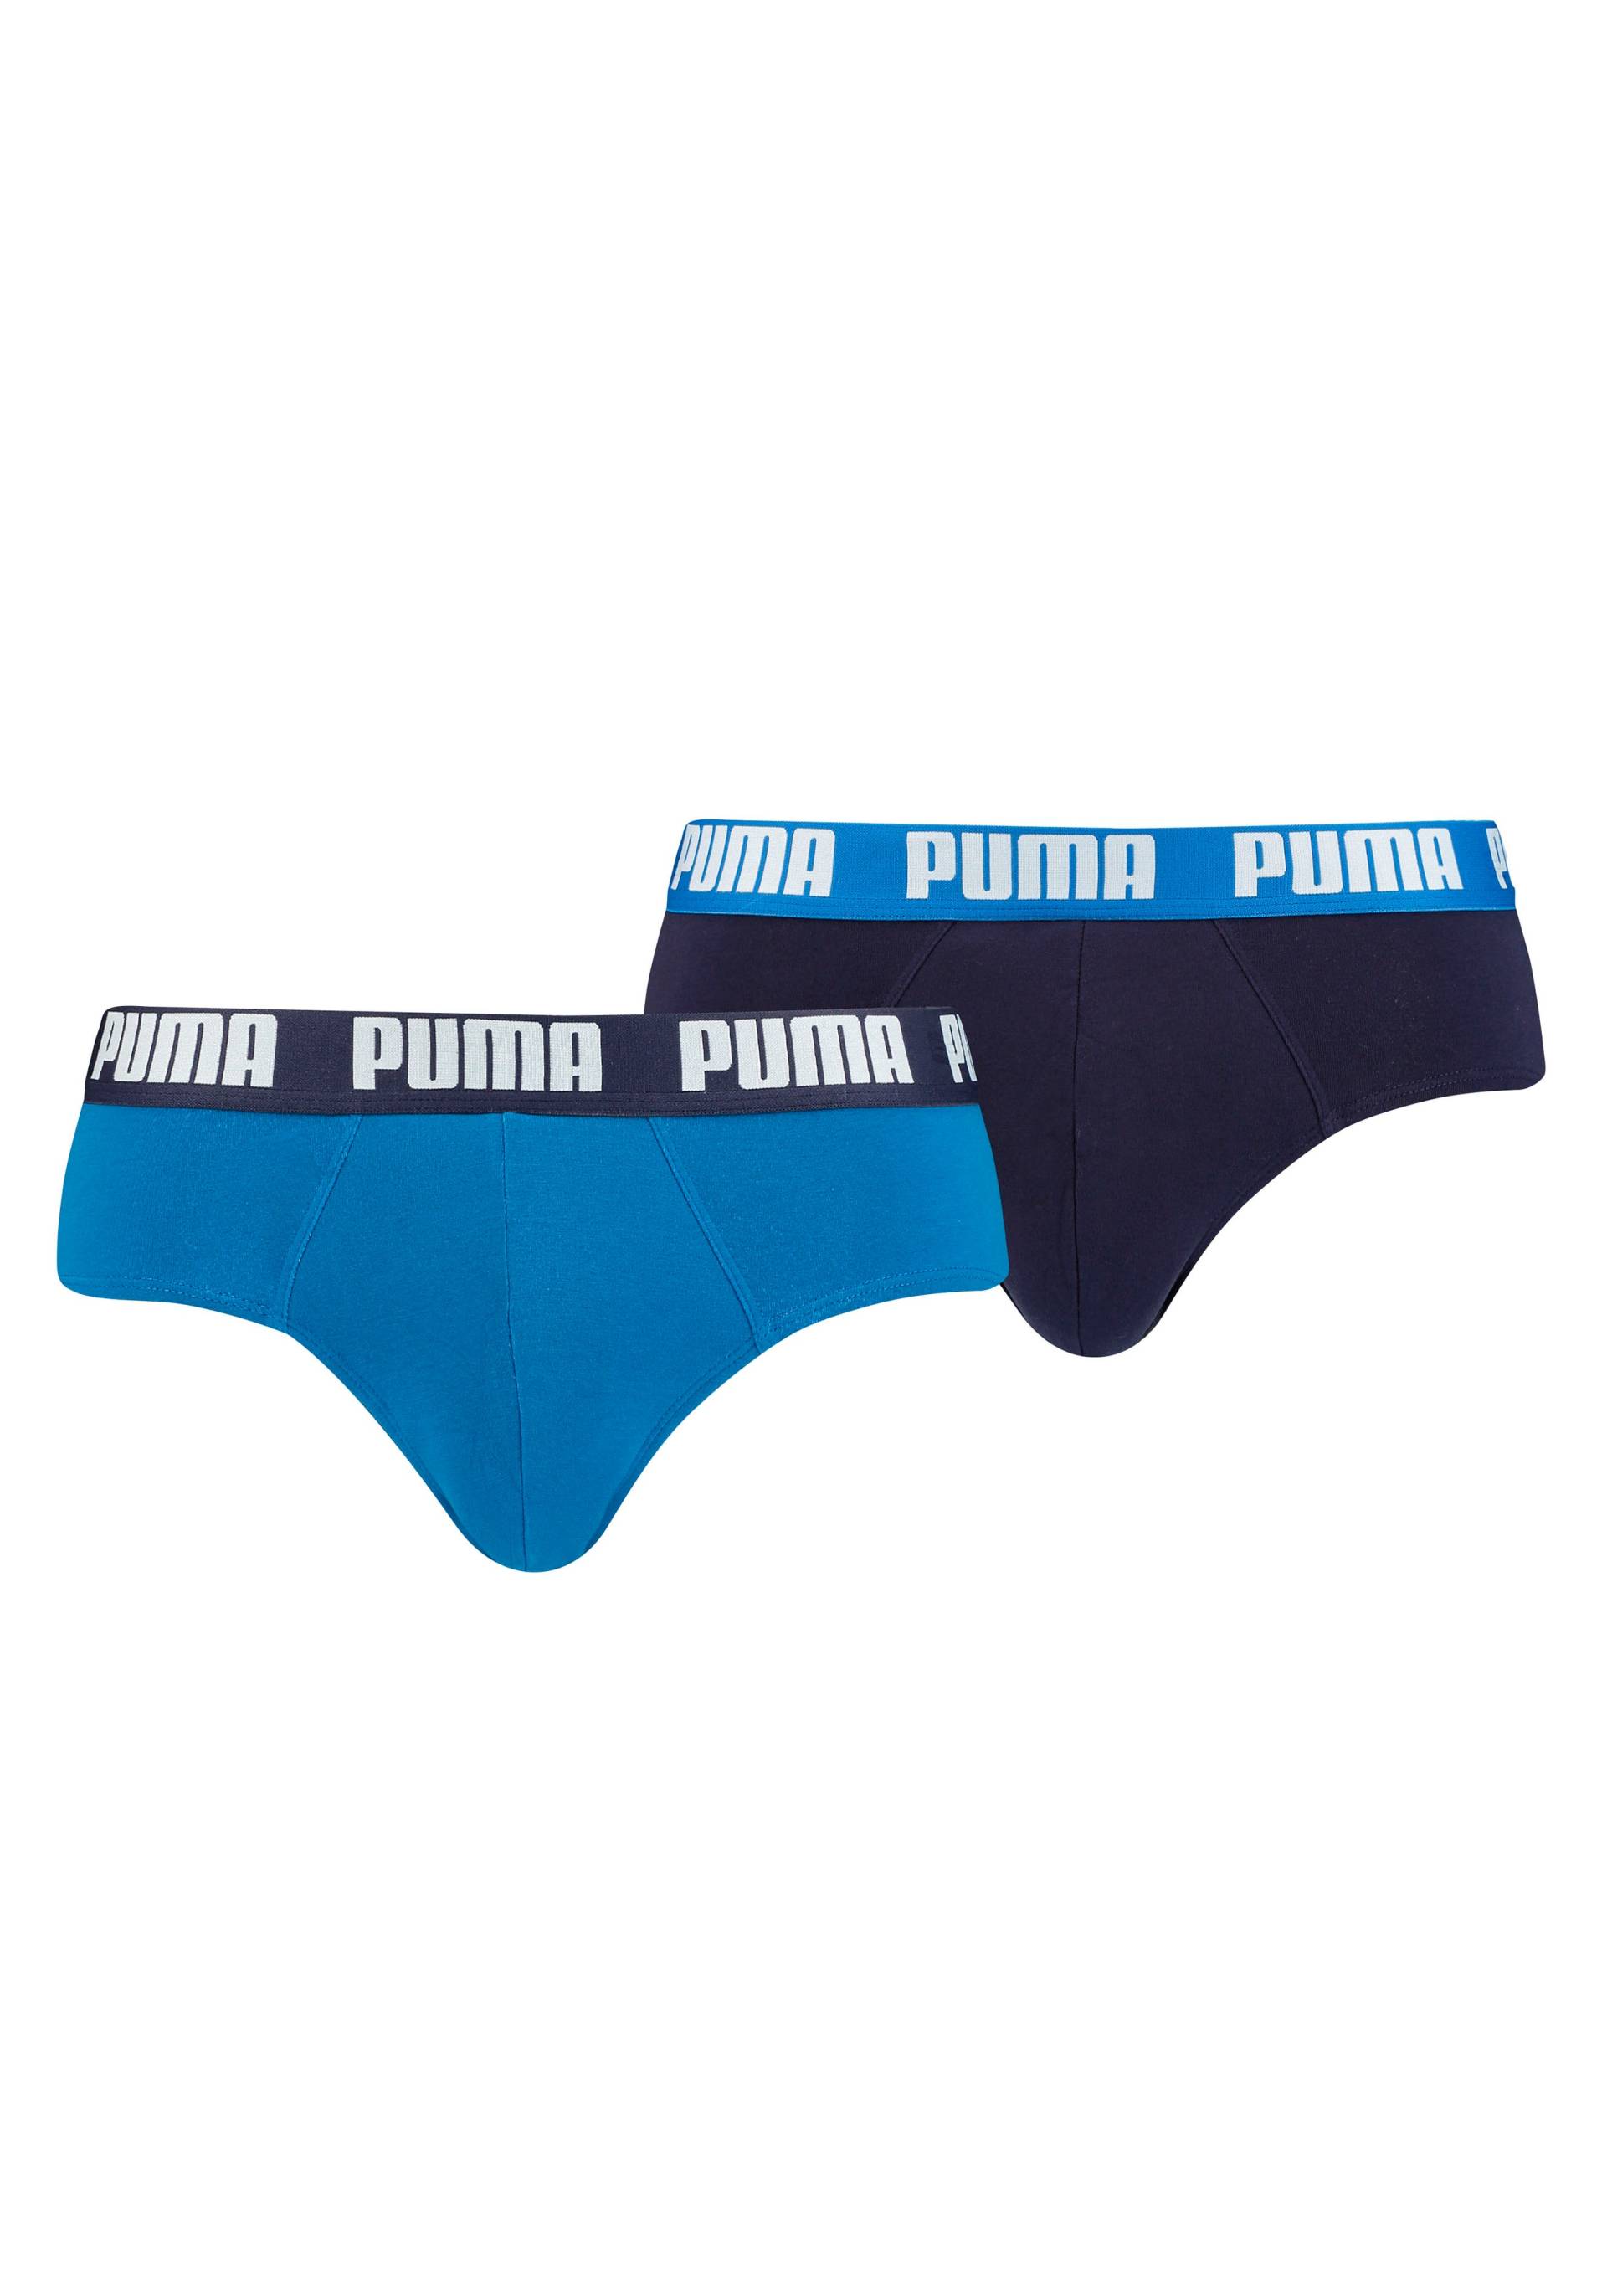 PUMA Slip, (Packung, 2 St.), PUMA BASIC BRIEF 2P von Puma